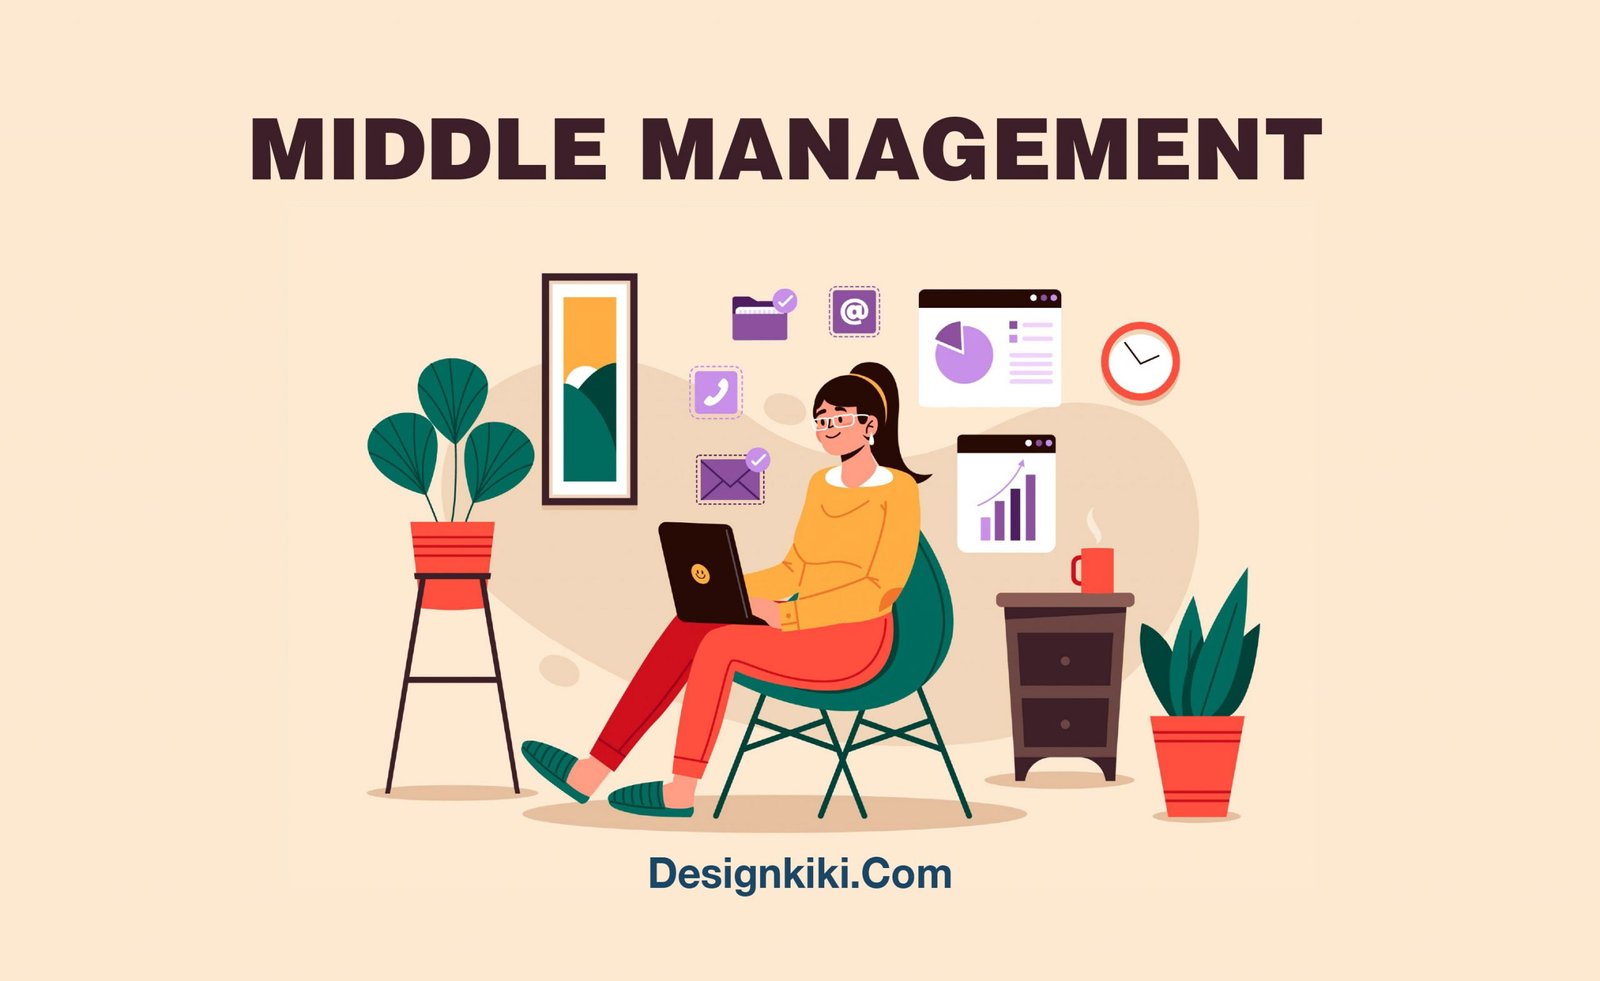 Middle management